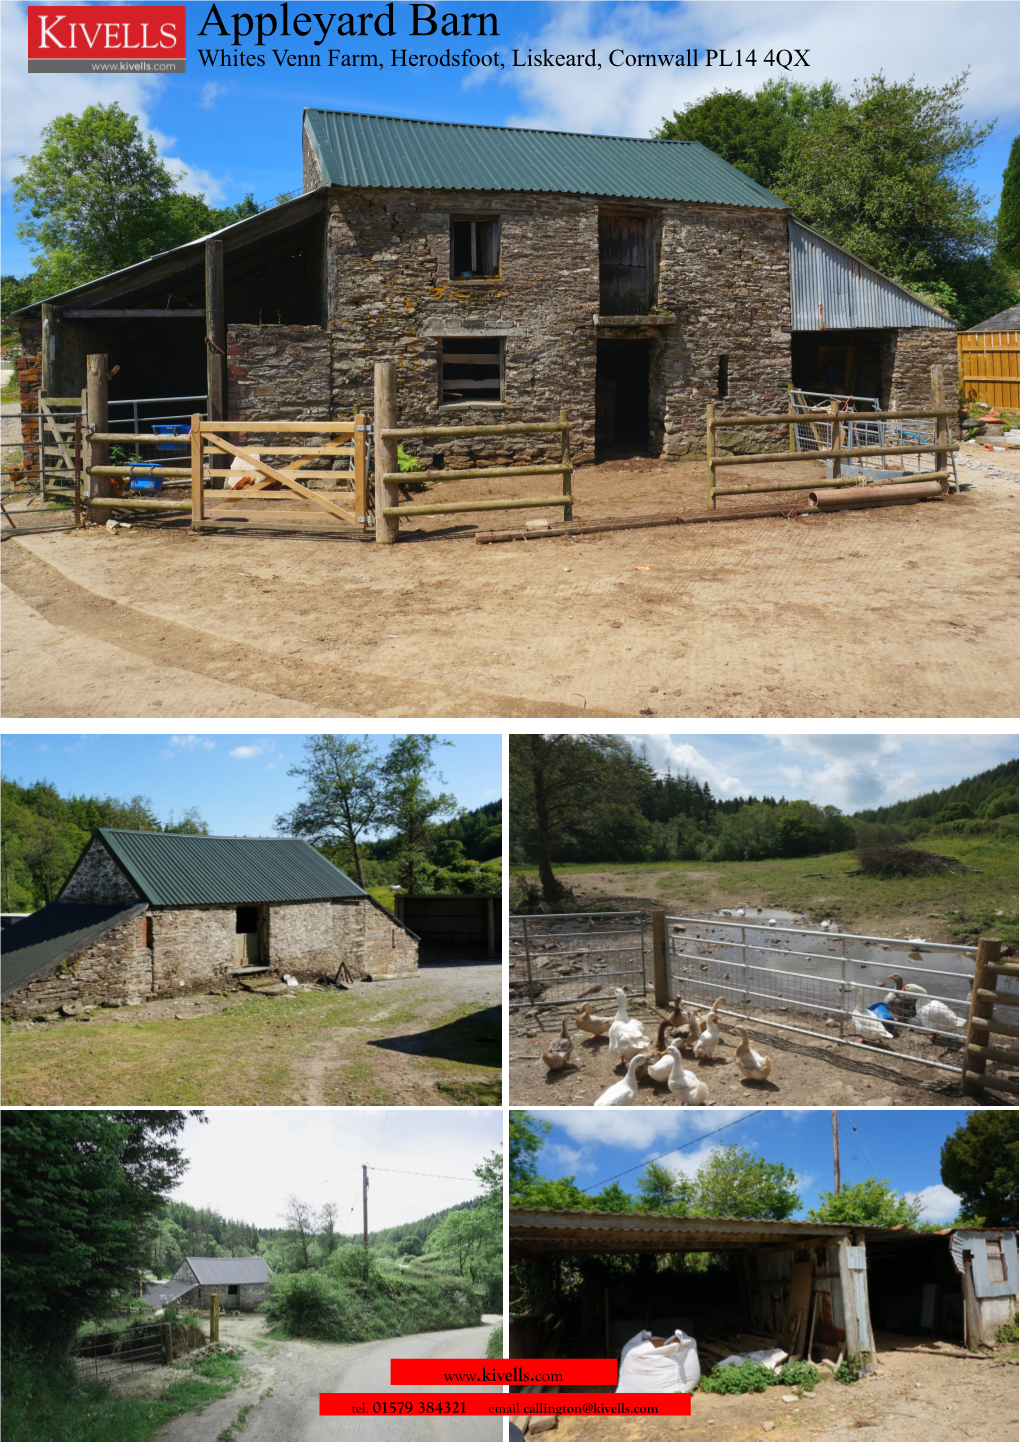 Appleyard Barn Whites Venn Farm, Herodsfoot, Liskeard, Cornwall PL14 4QX